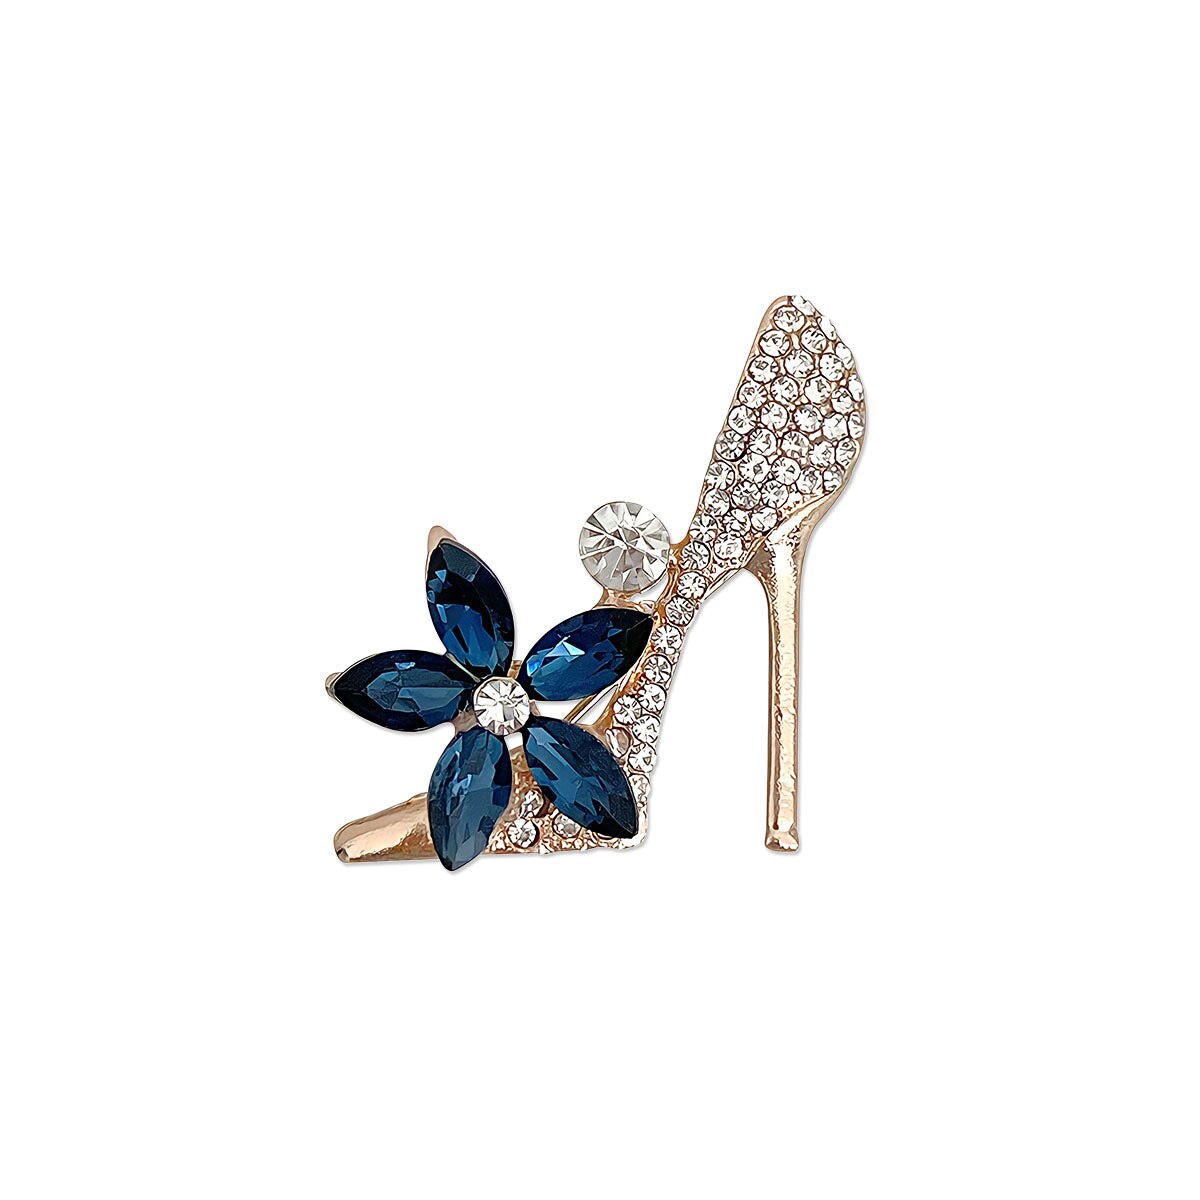 Wrapables Crystal Rhinestone High Heel Shoe Brooch Pin, Blue